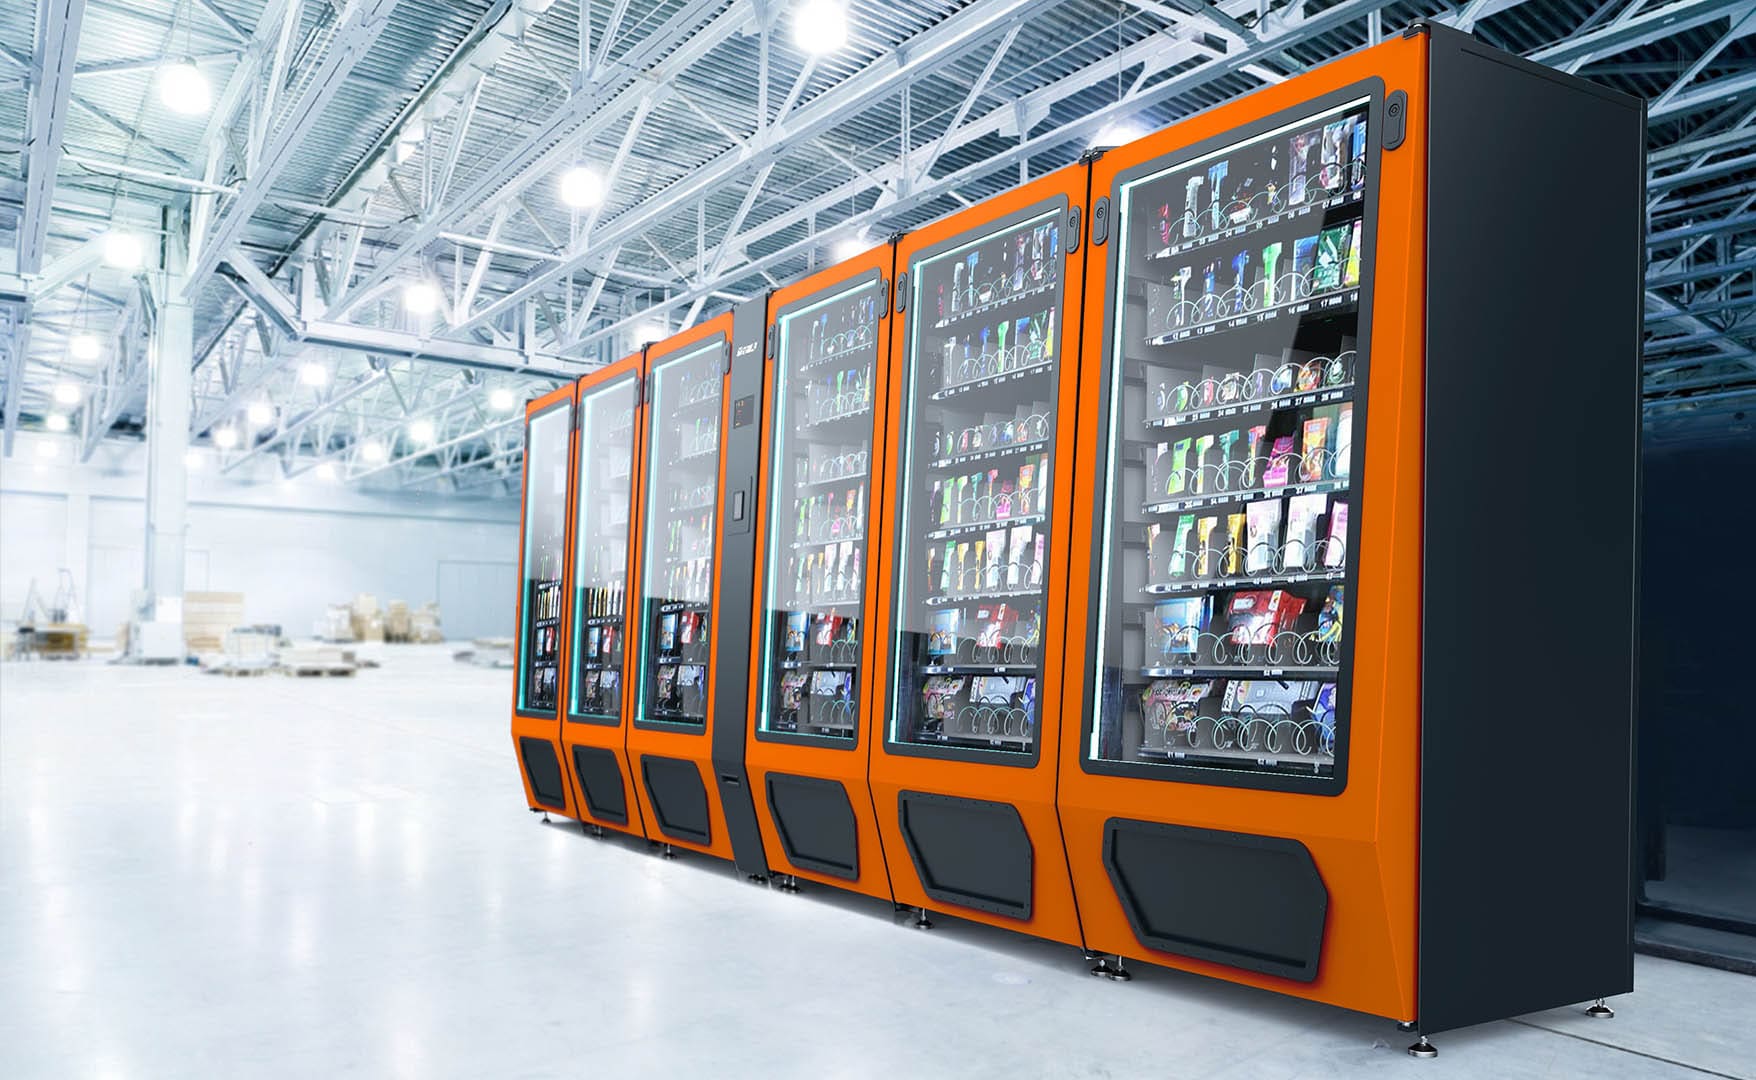 Vending machine inside the warehouse